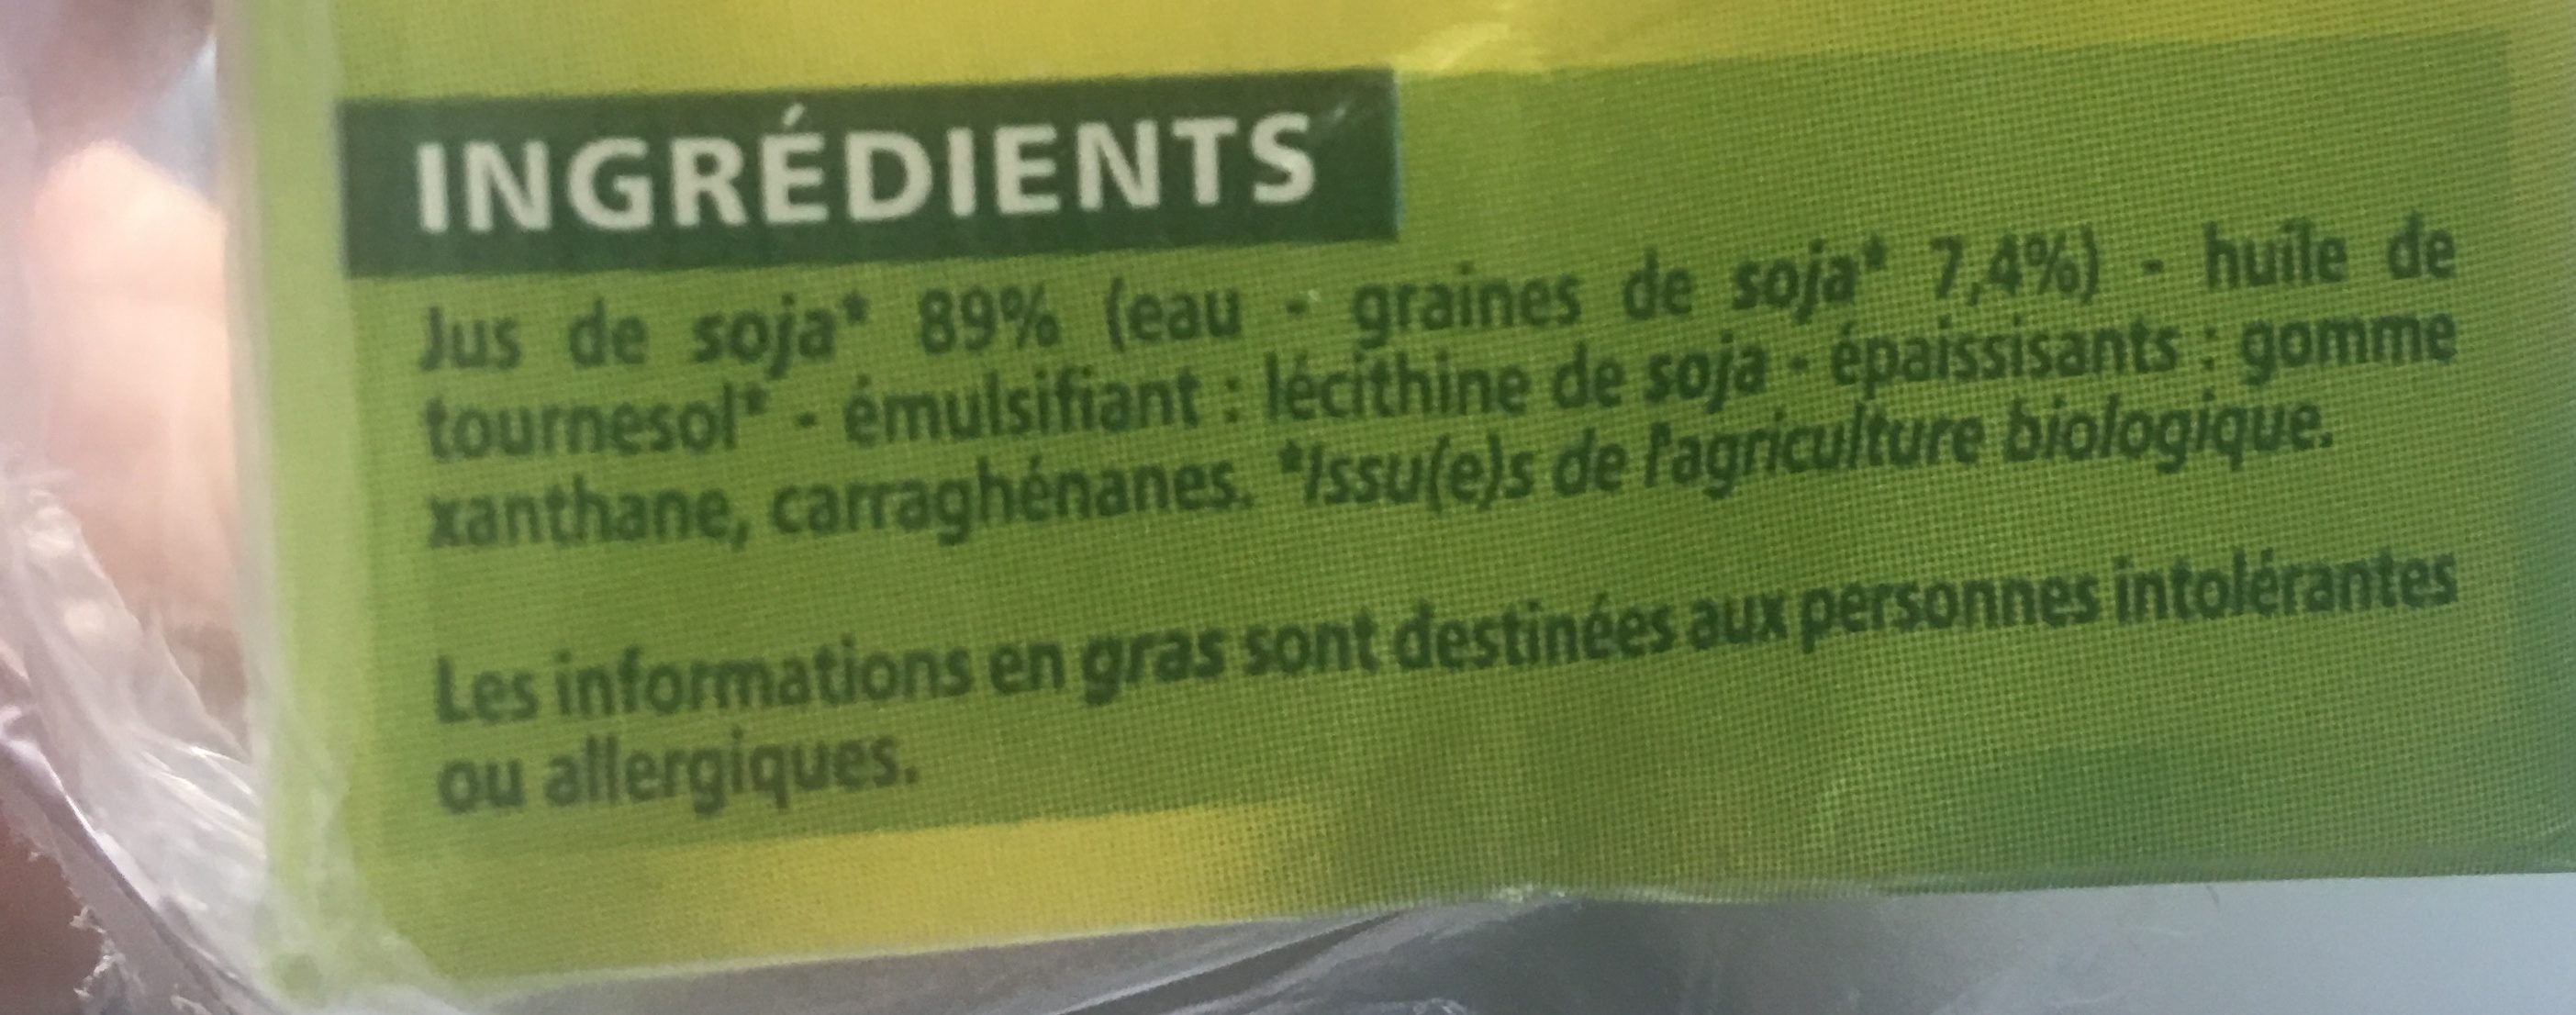 Bio Soja cuisine - Ingredientes - fr